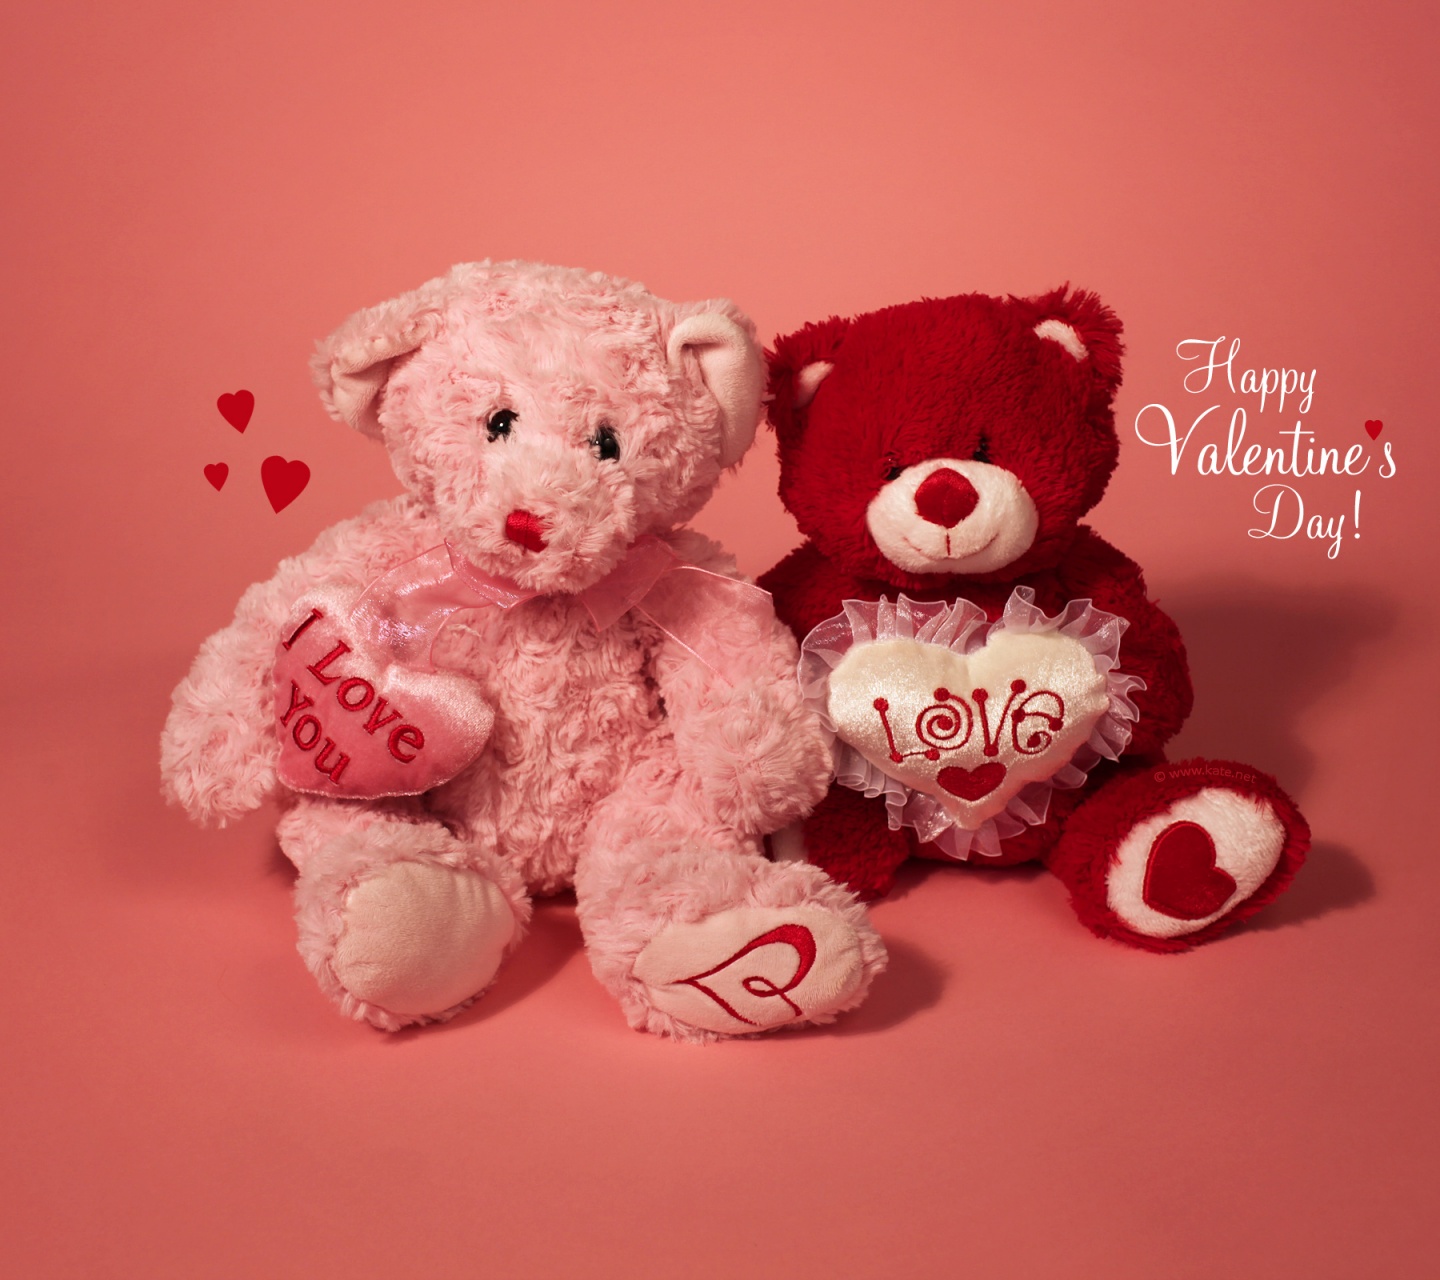 Teddy Bears For Valentine